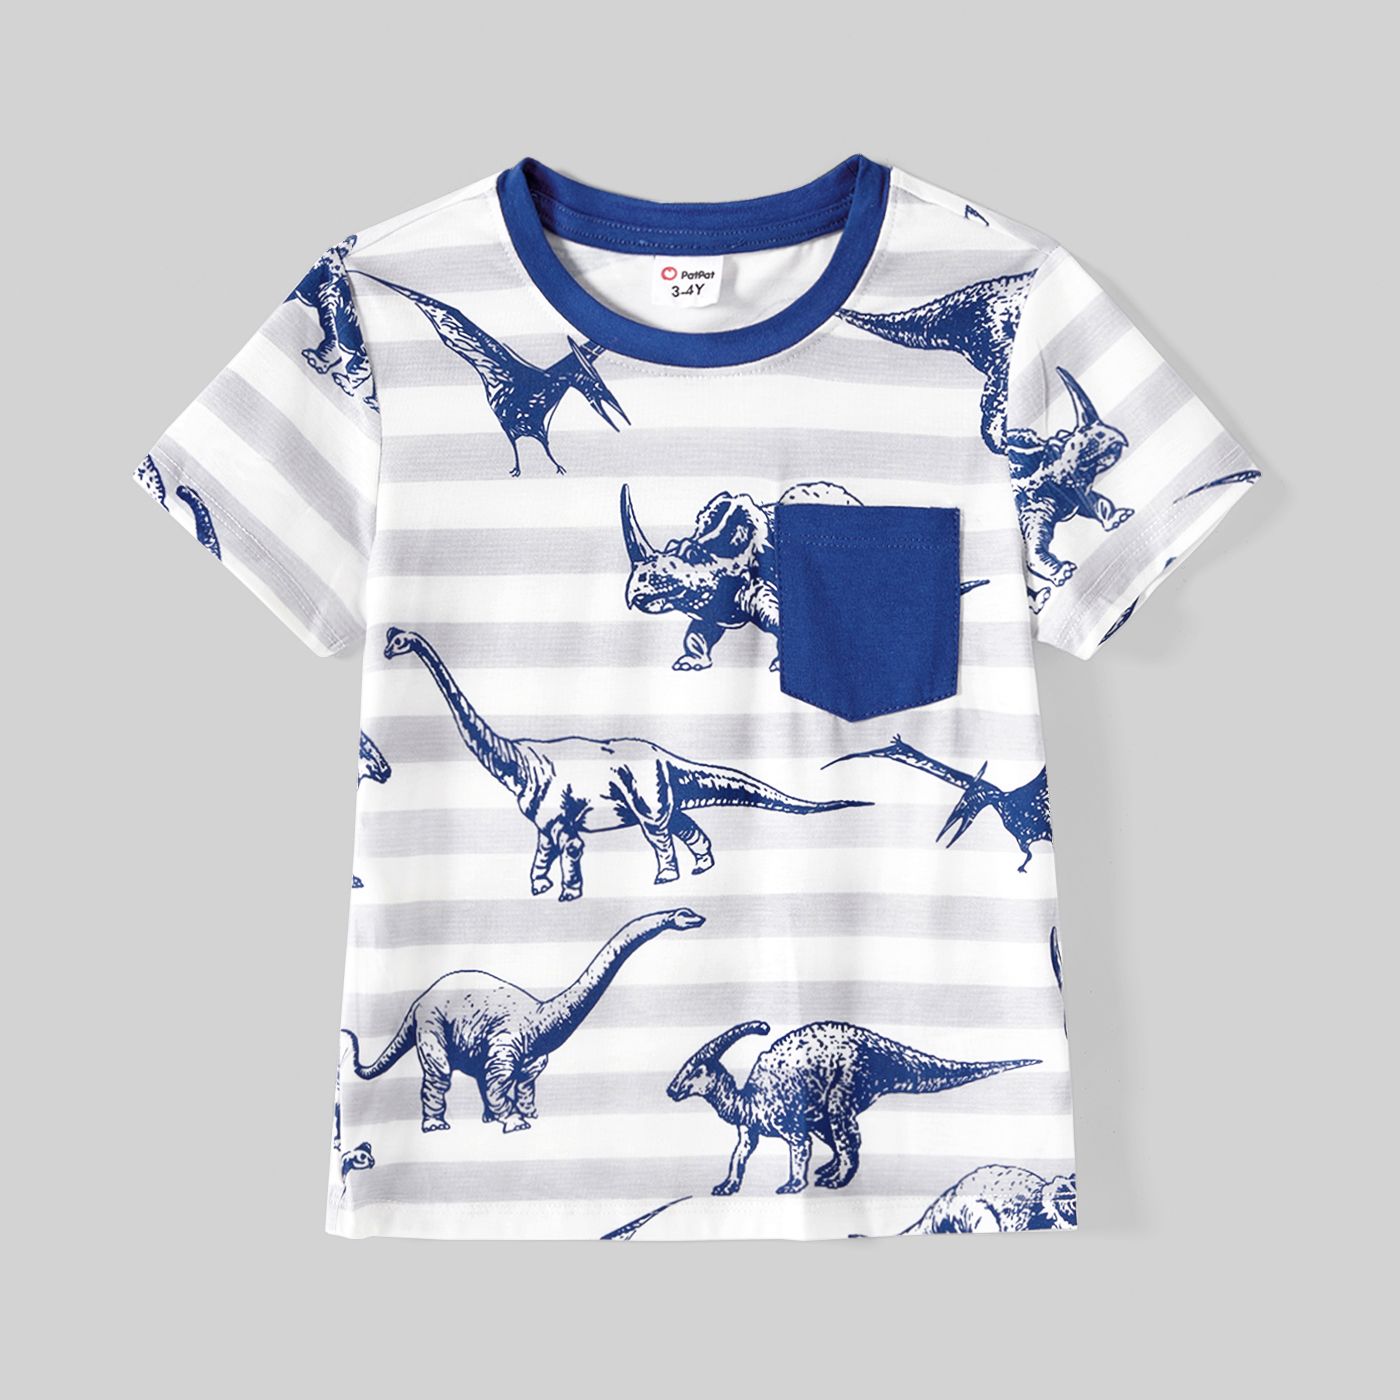 Family Matching Cotton Short-sleeve T-shirts And Allover Dinosaur Print Spliced Naiaâ¢ Dresses